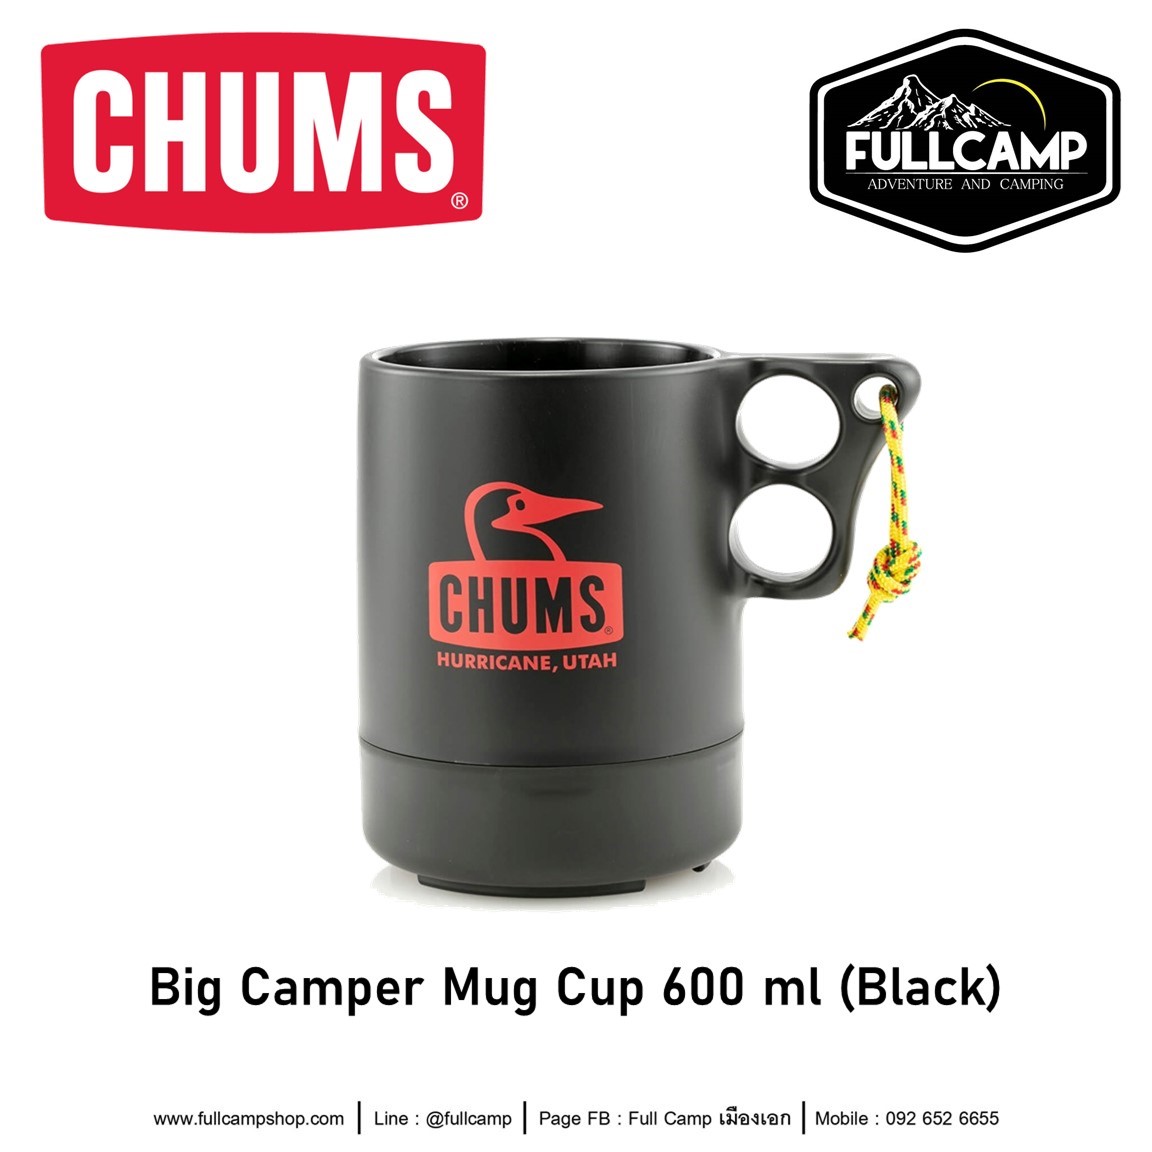 CHUMS Big Camper Mug Cup 600 ml